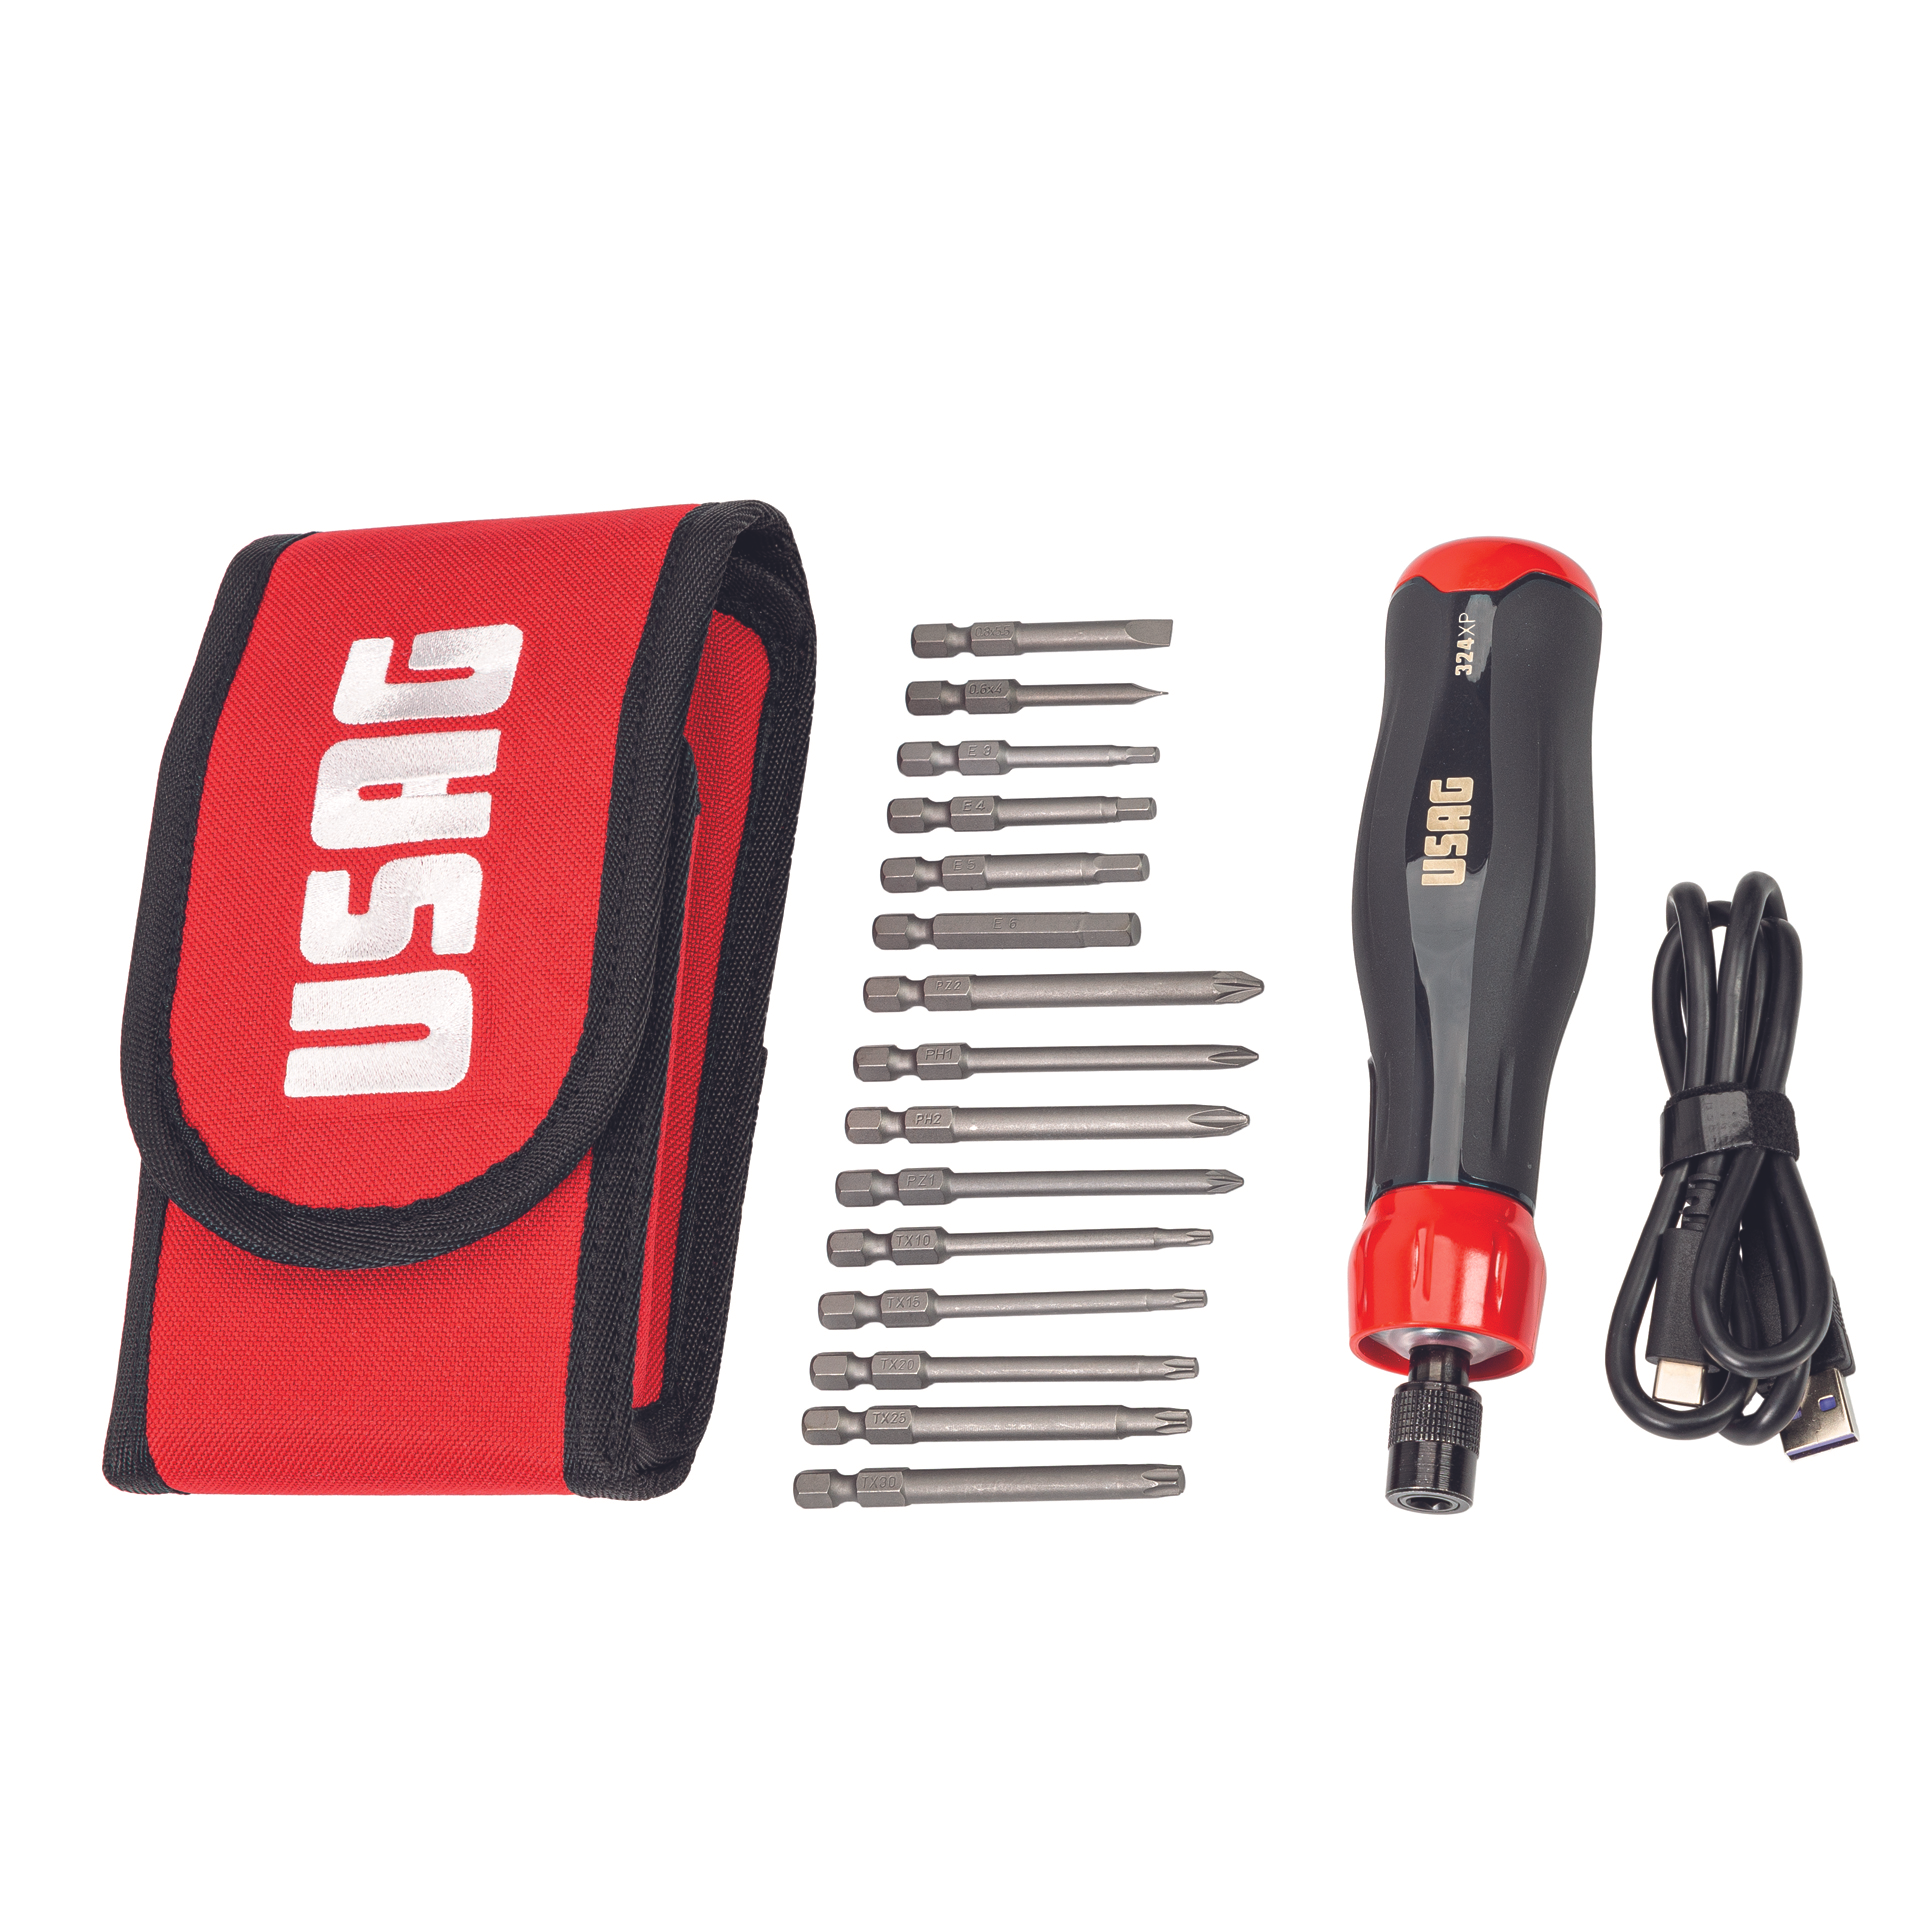 Bag with power assist screwdrivers and bits (16 PCS) - Usag 324 XP/B16